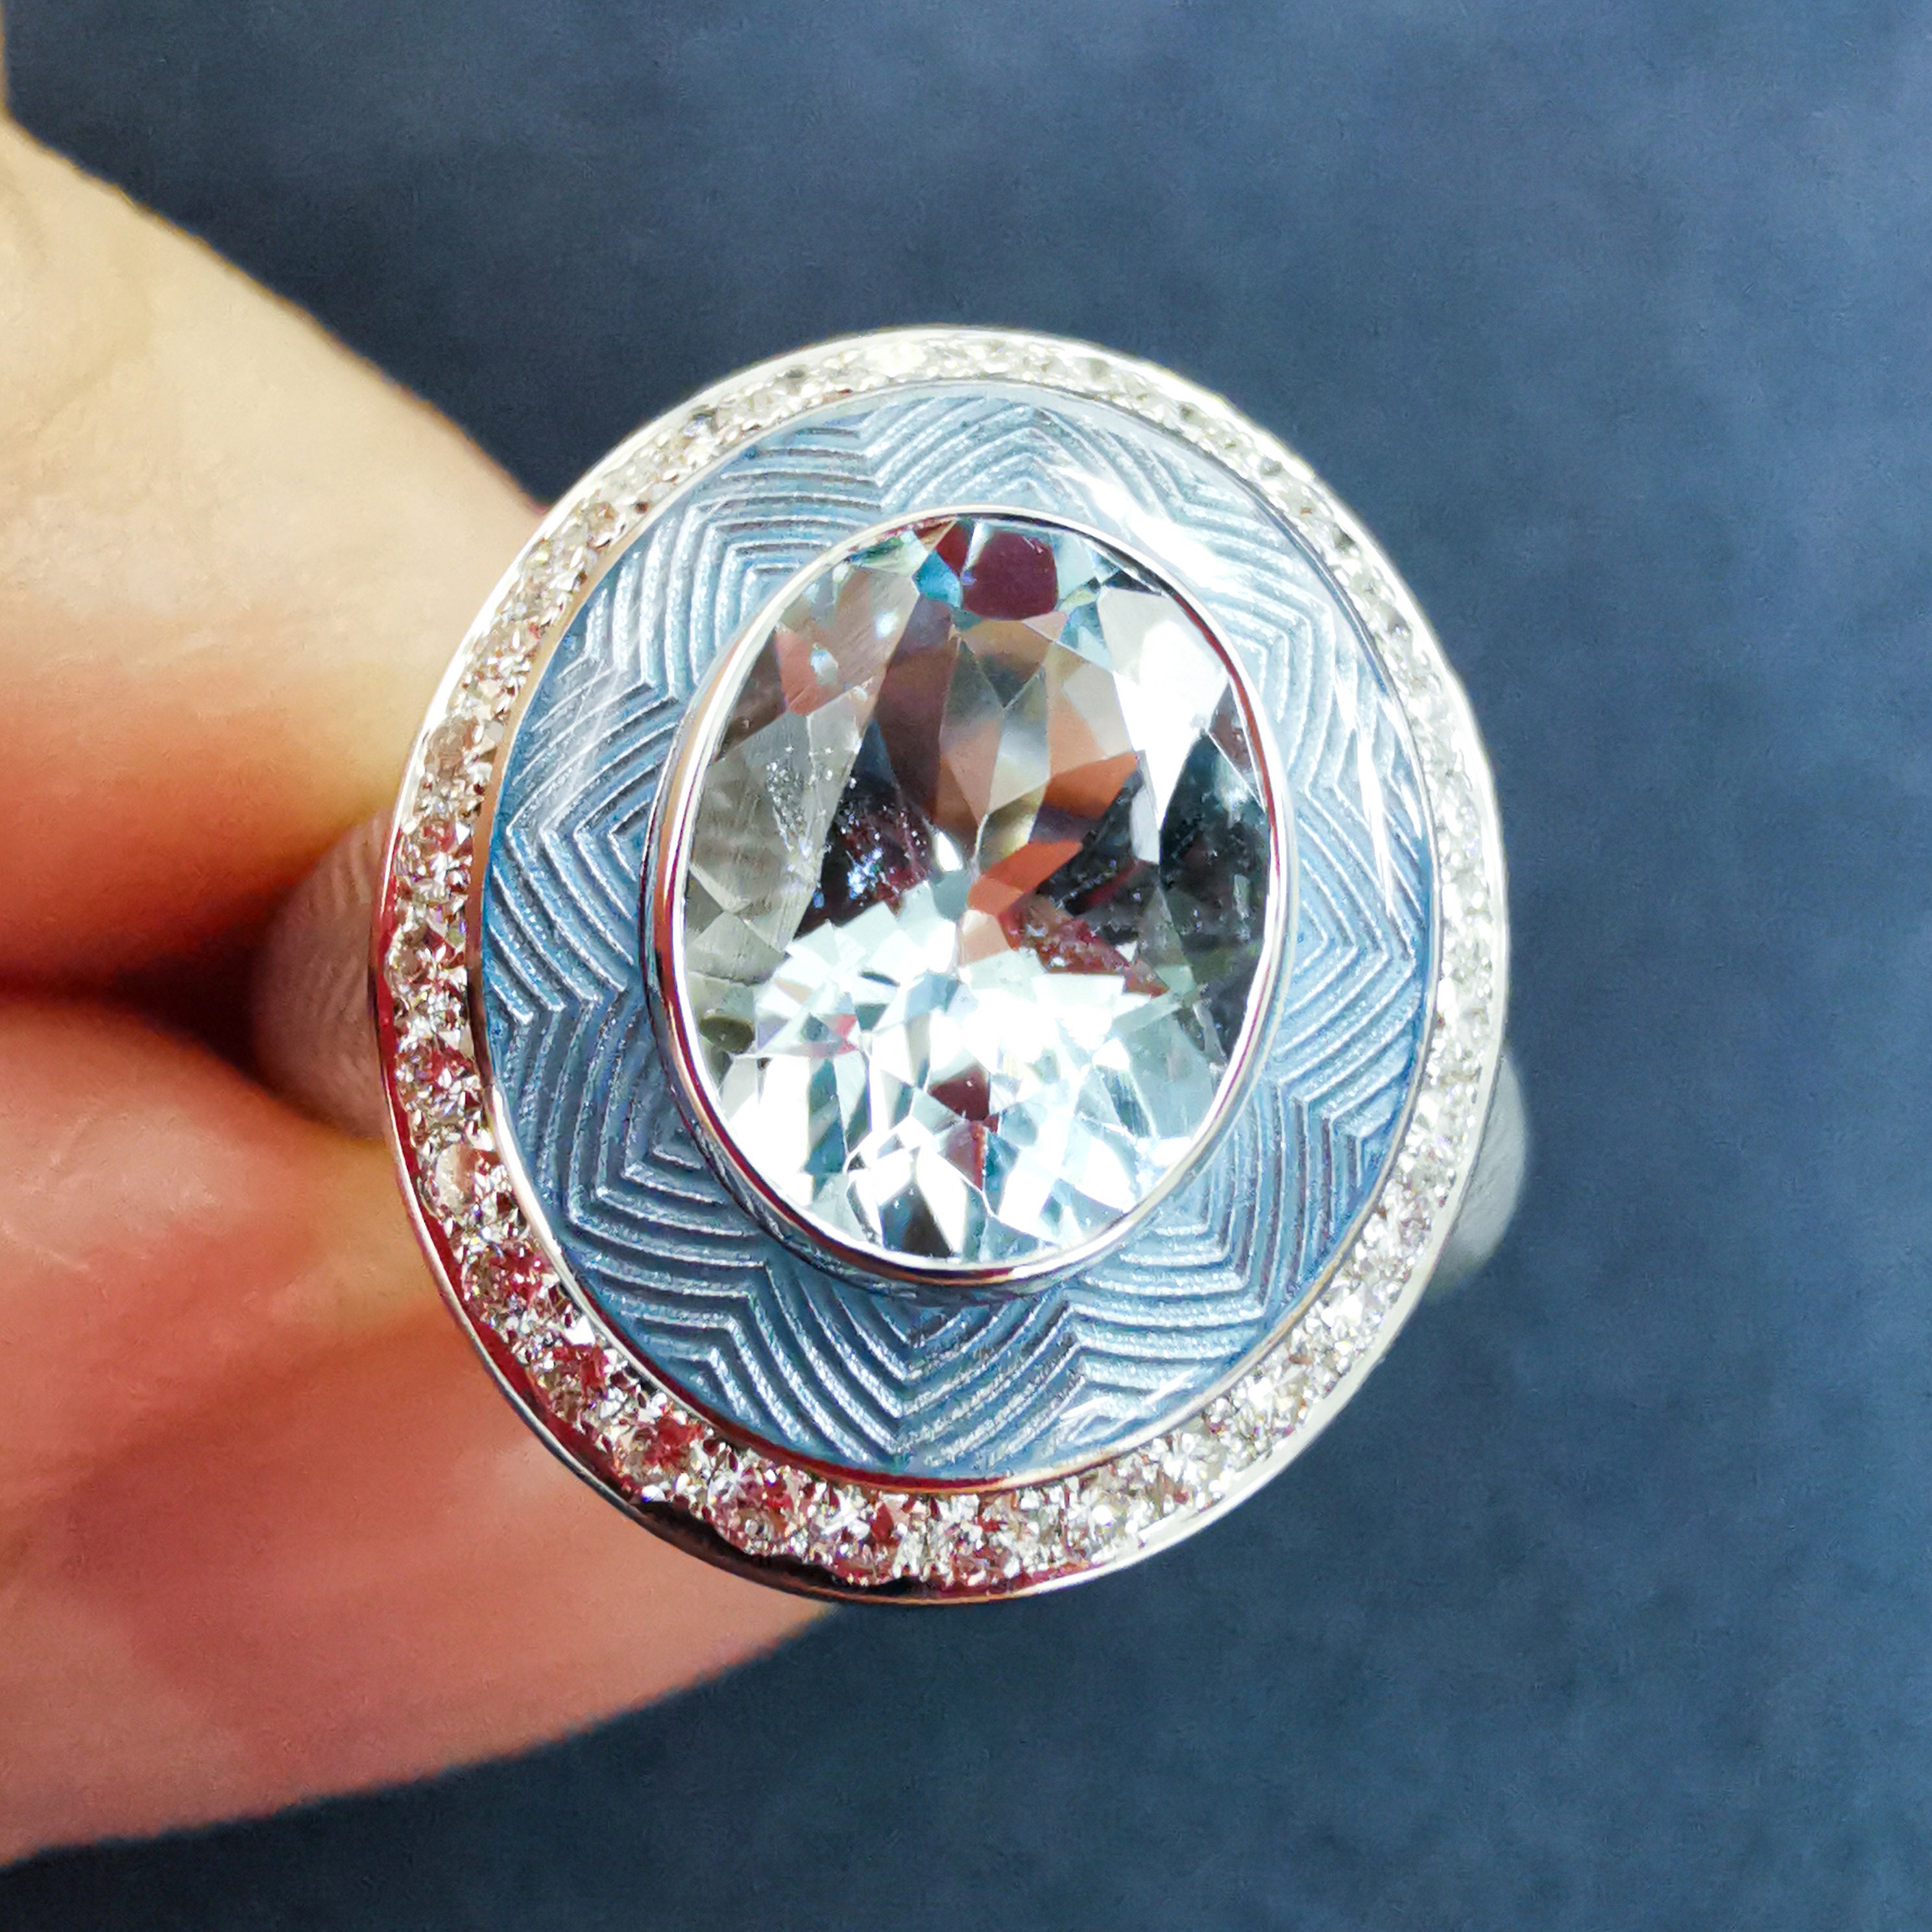 R 0084-2 18K White Gold, Enamel, Aquamarine, Diamonds Ring